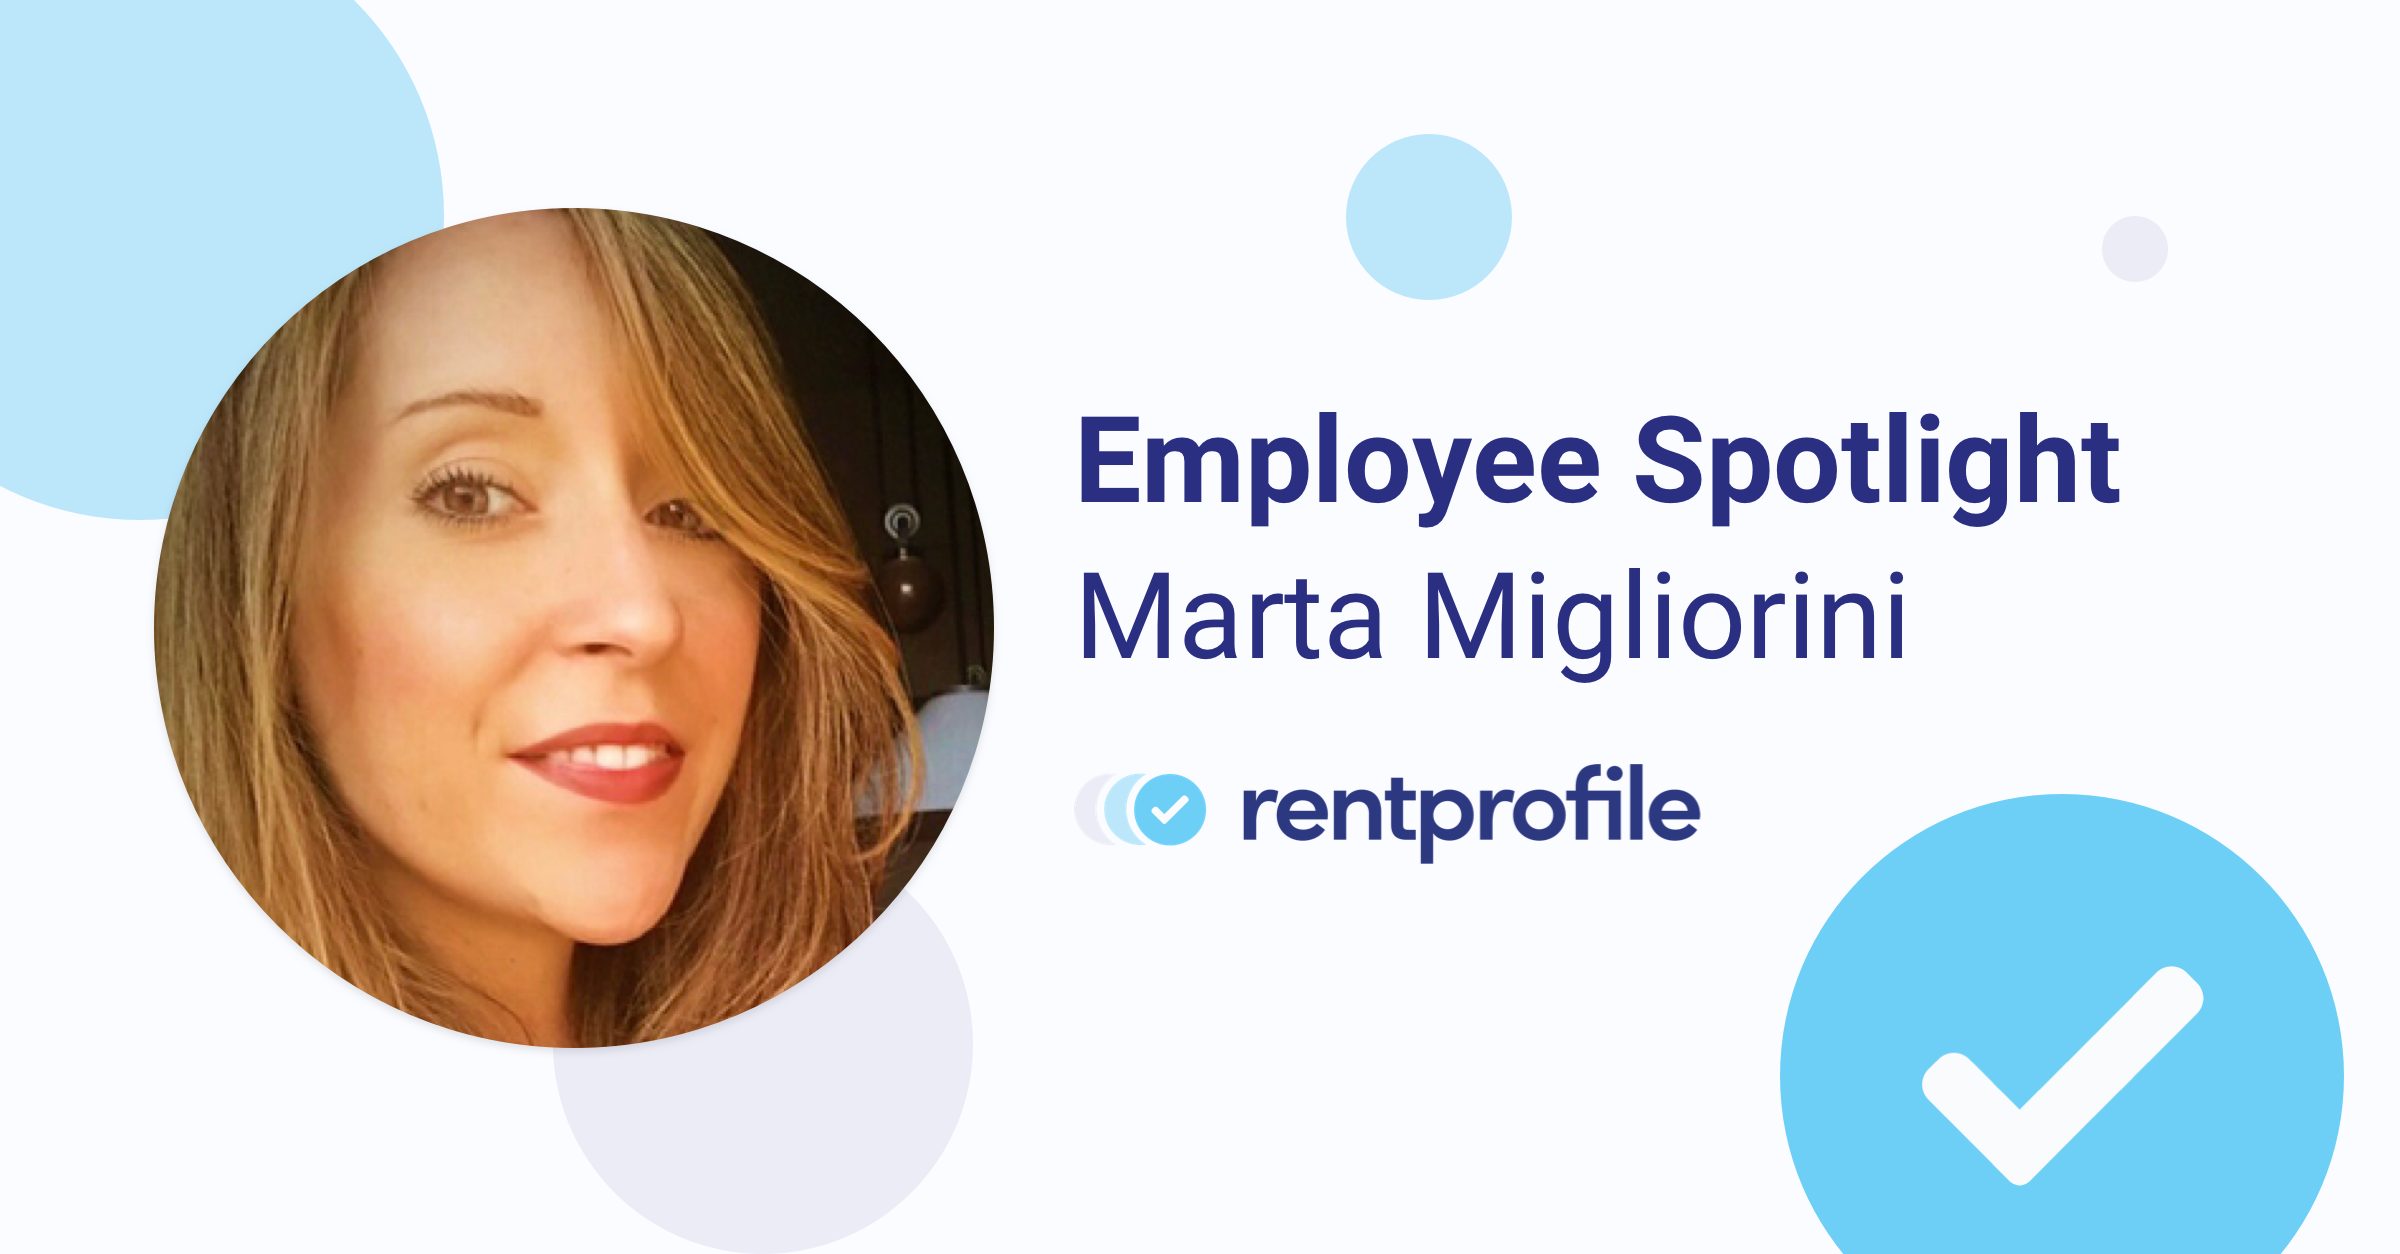 Employee Spotlight: Marta Migliorini